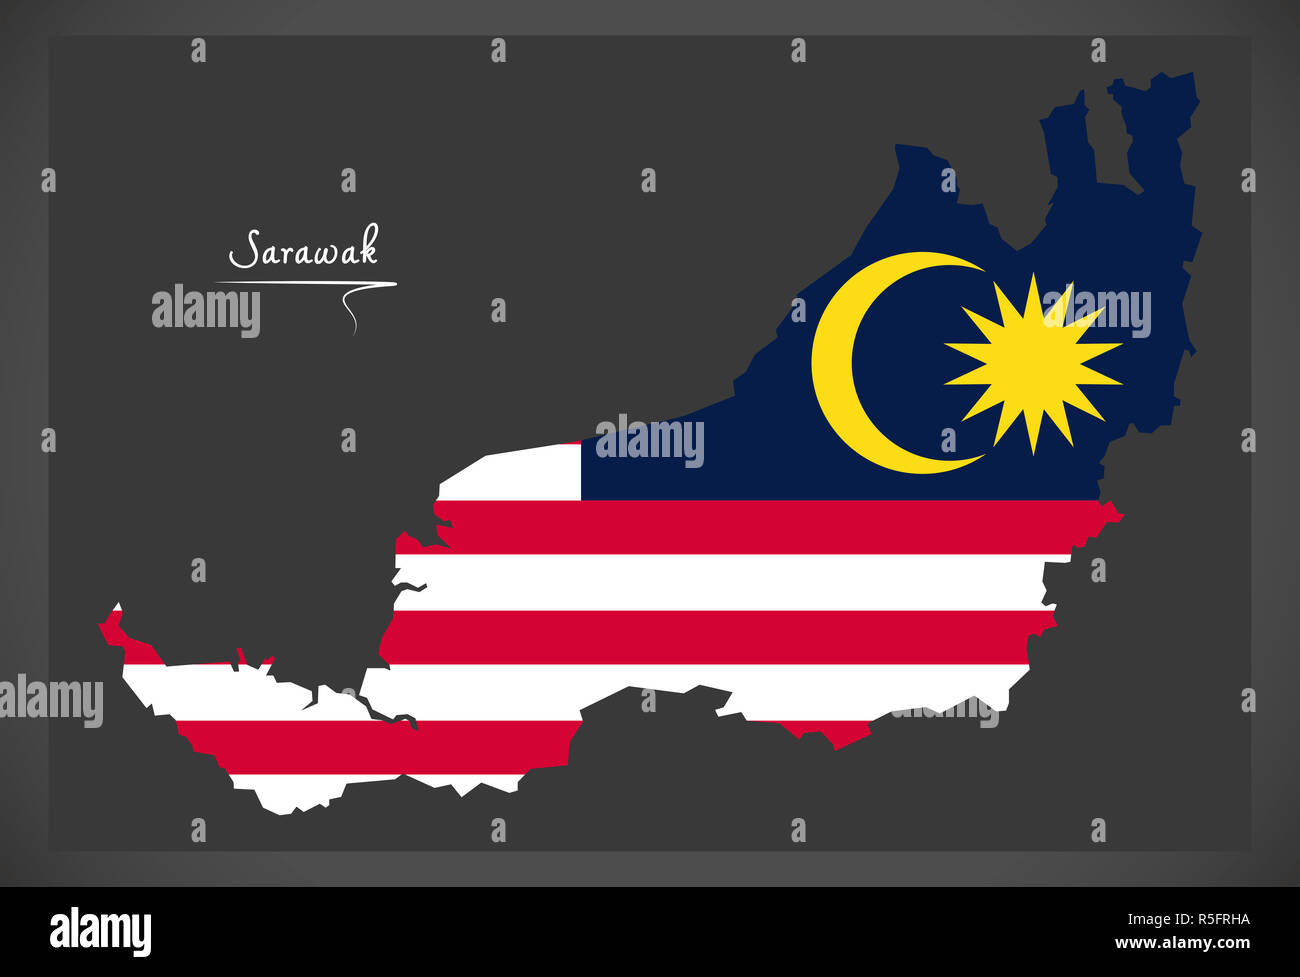 Sarawak Malaysia map with Malaysian national flag illustration Stock Photo